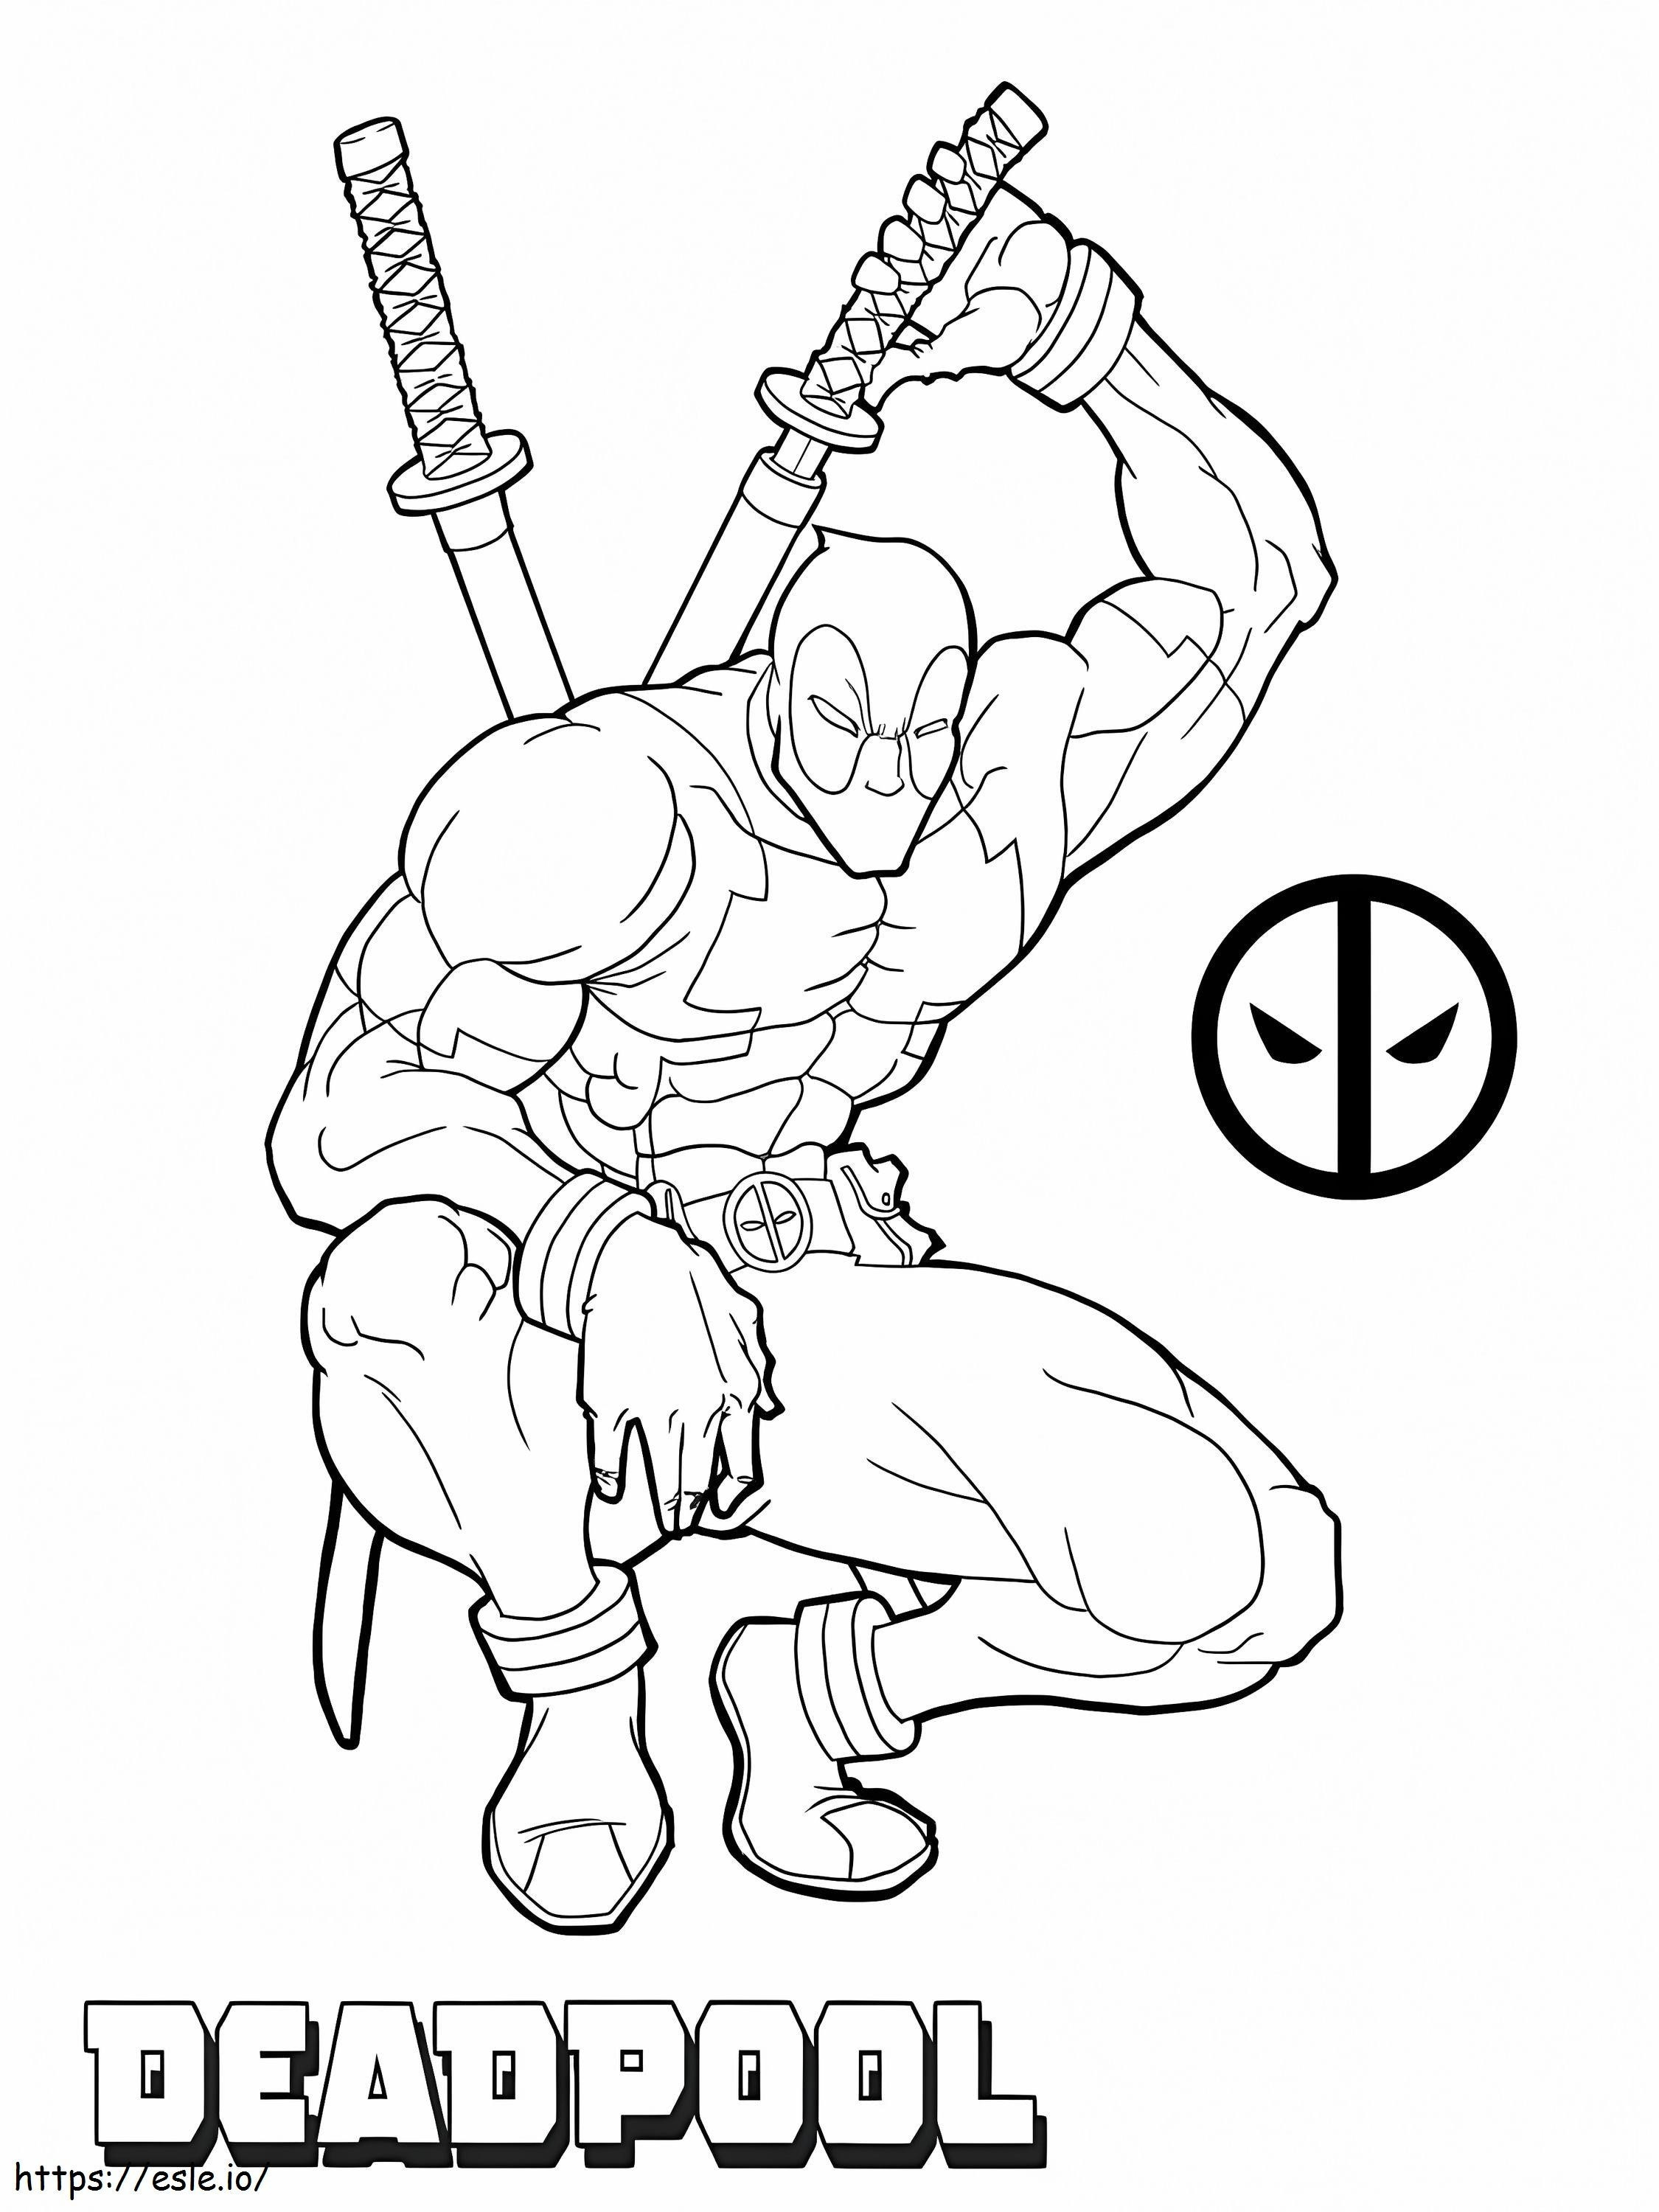 Super Deadpool coloring page